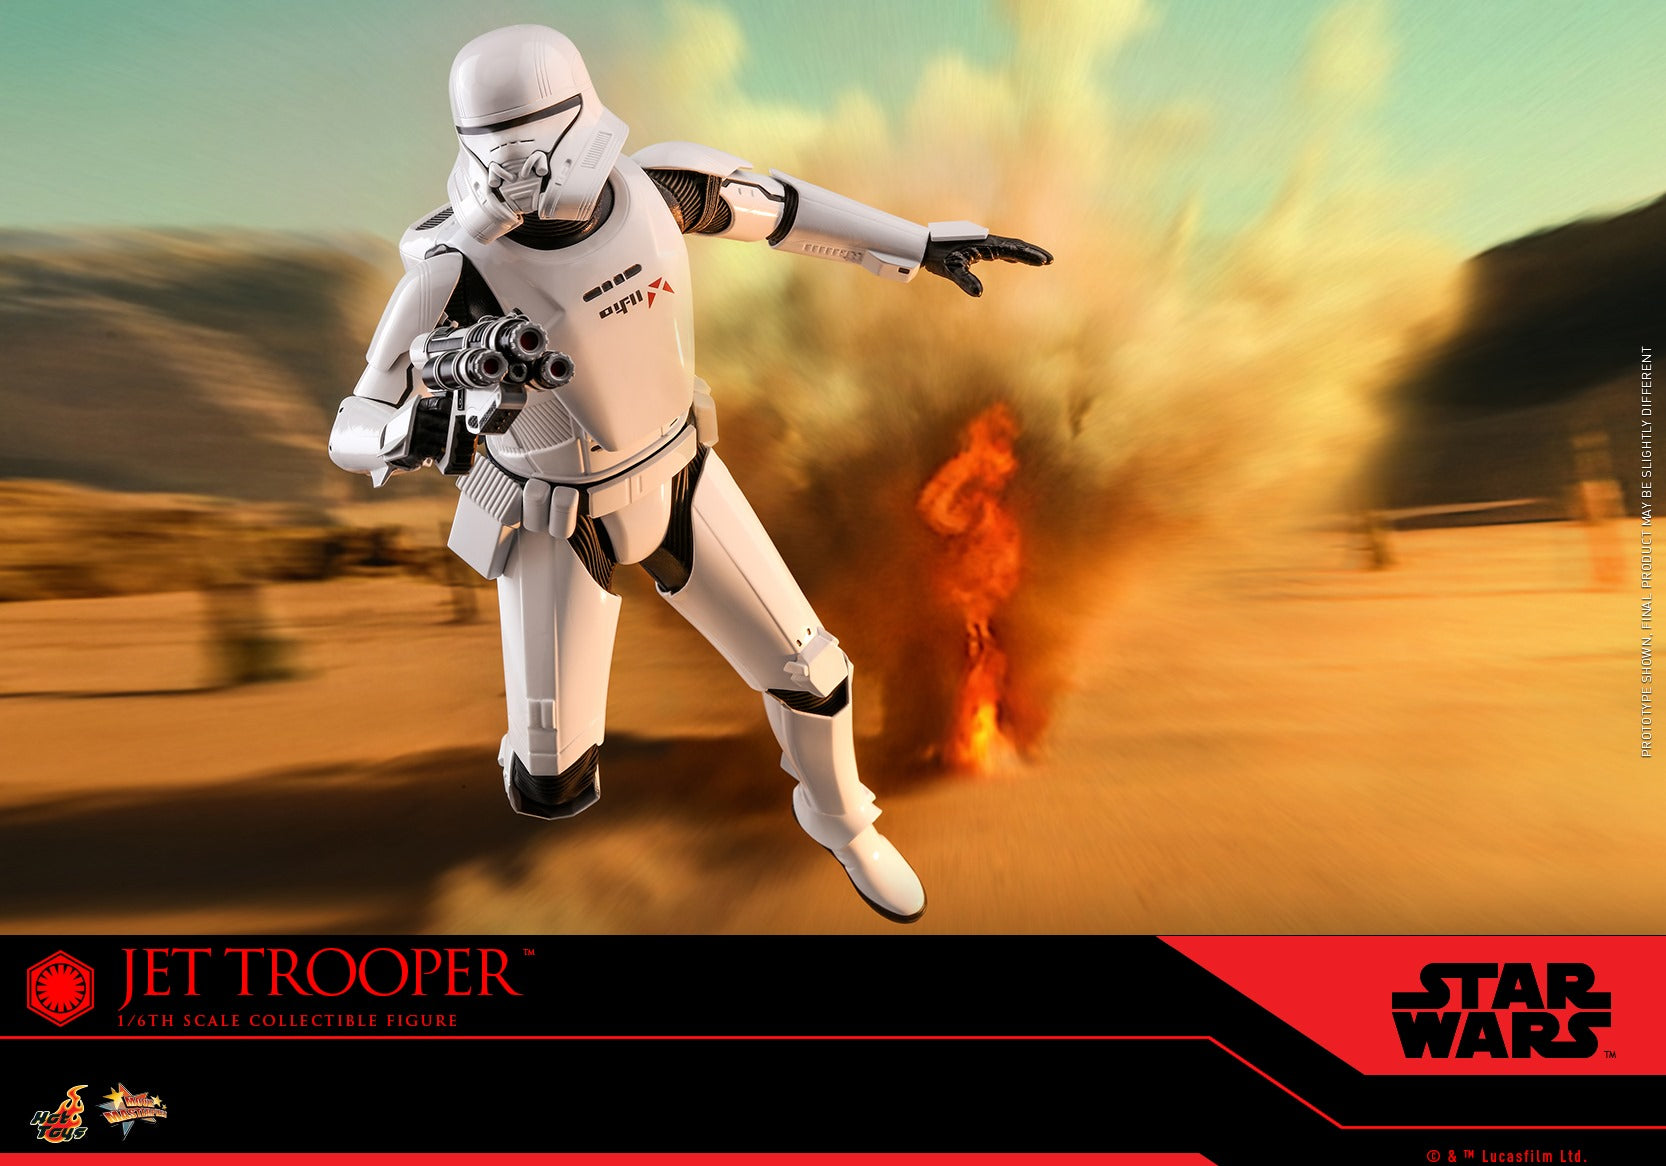 Hot Toys - MMS561 - Star Wars: The Rise of Skywalker - Jet Trooper - Marvelous Toys